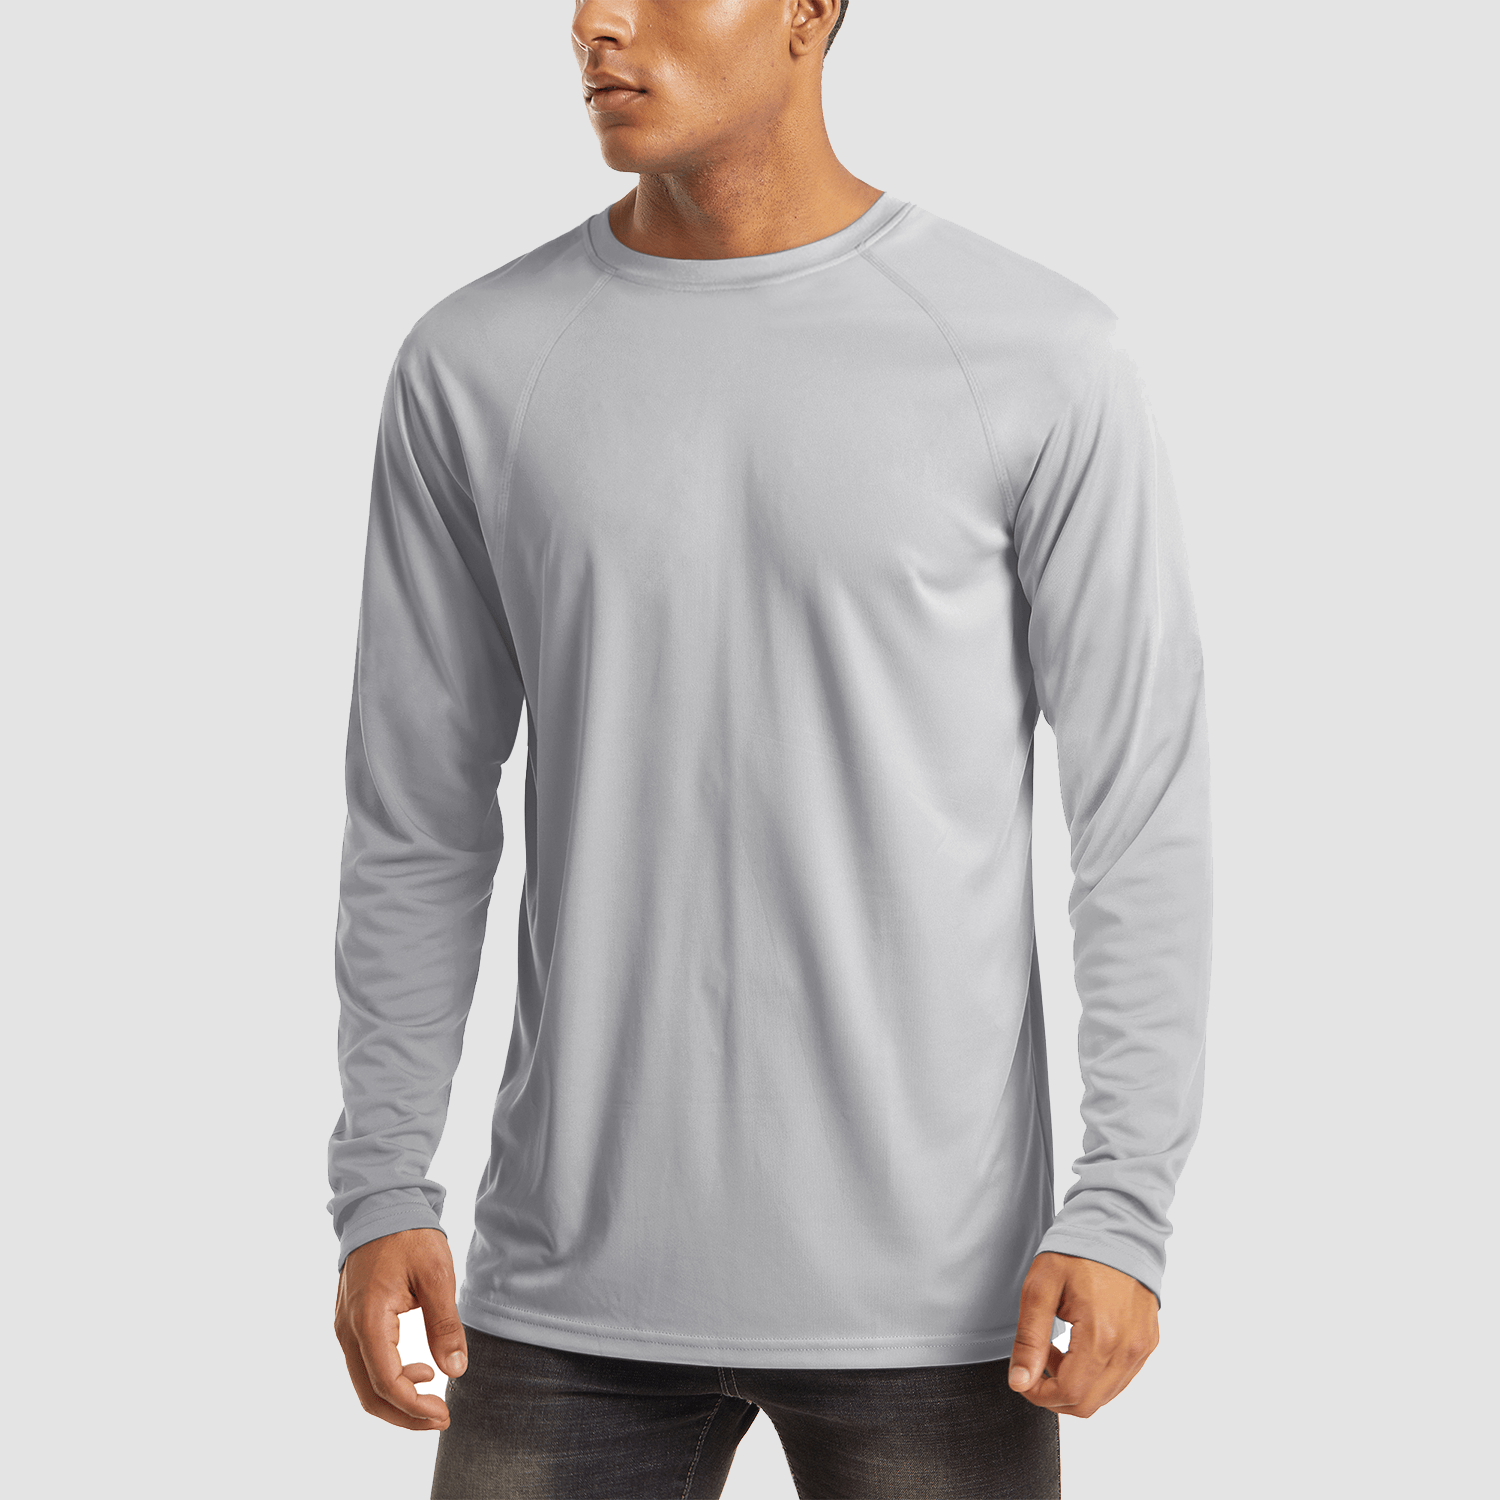 【Buy 4 Get 4th Free】Men's Long Sleeve Hooded Shirt UPF 50+ Athletic Shirts, Blue Grey / XXL